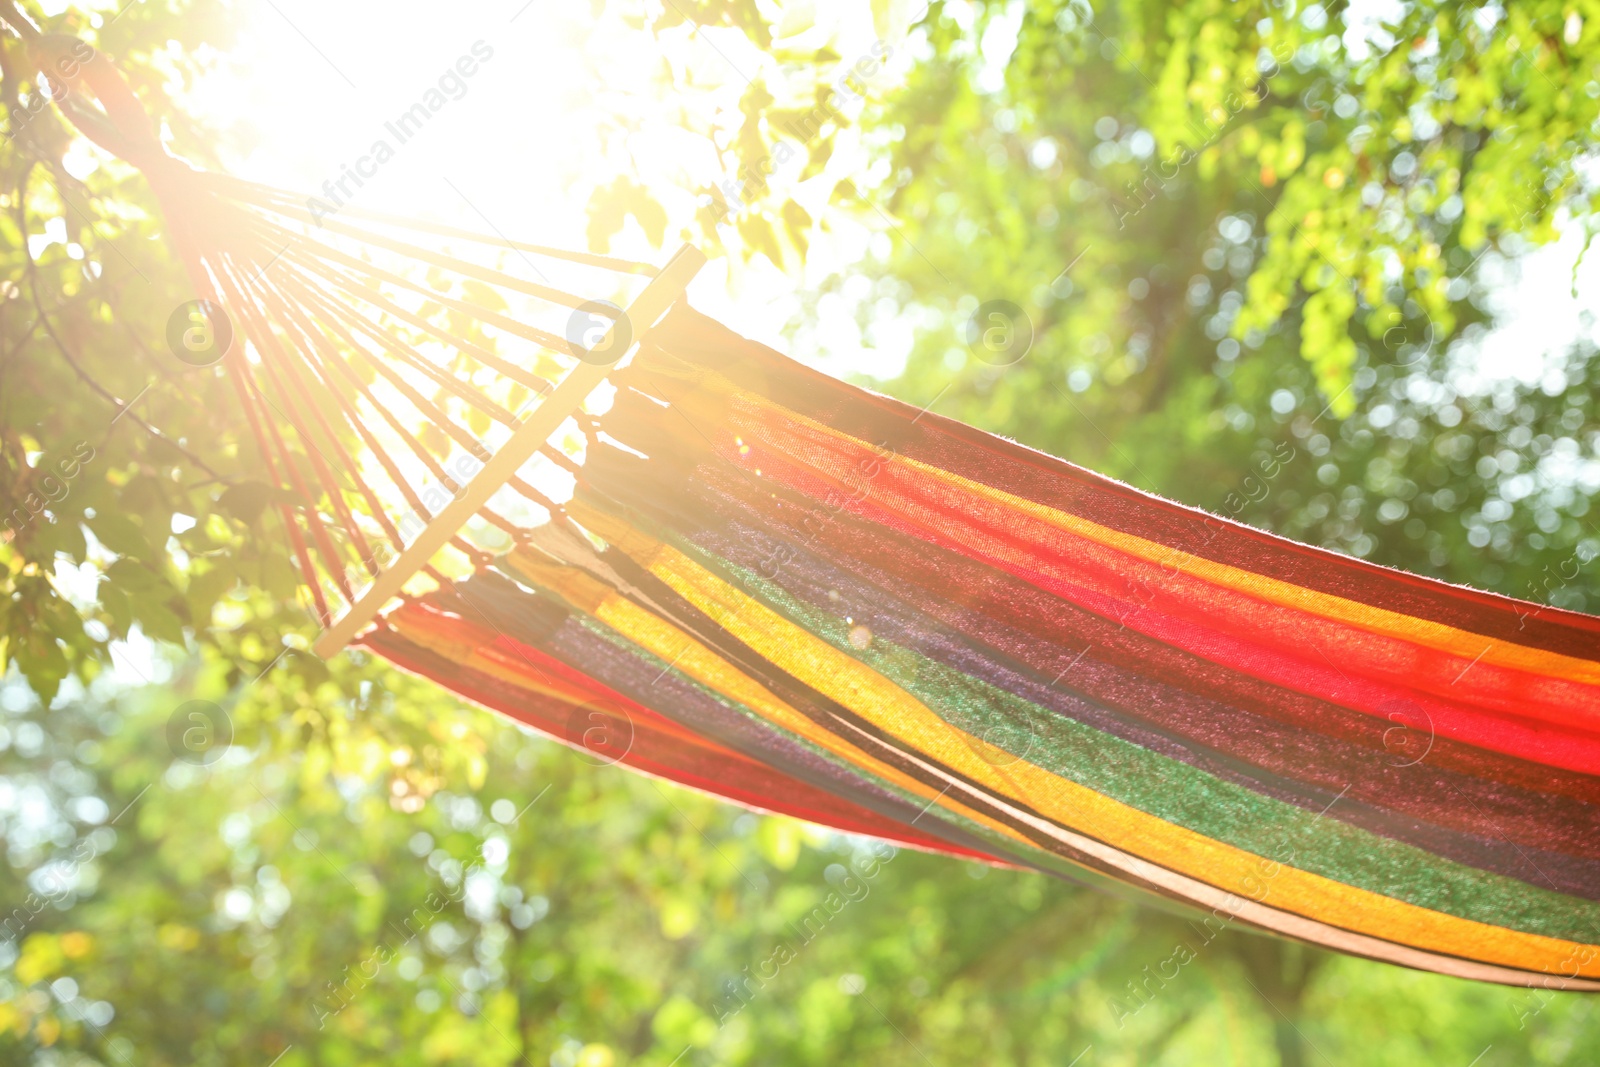 Photo of Bright comfortable hammock hanging in green garden